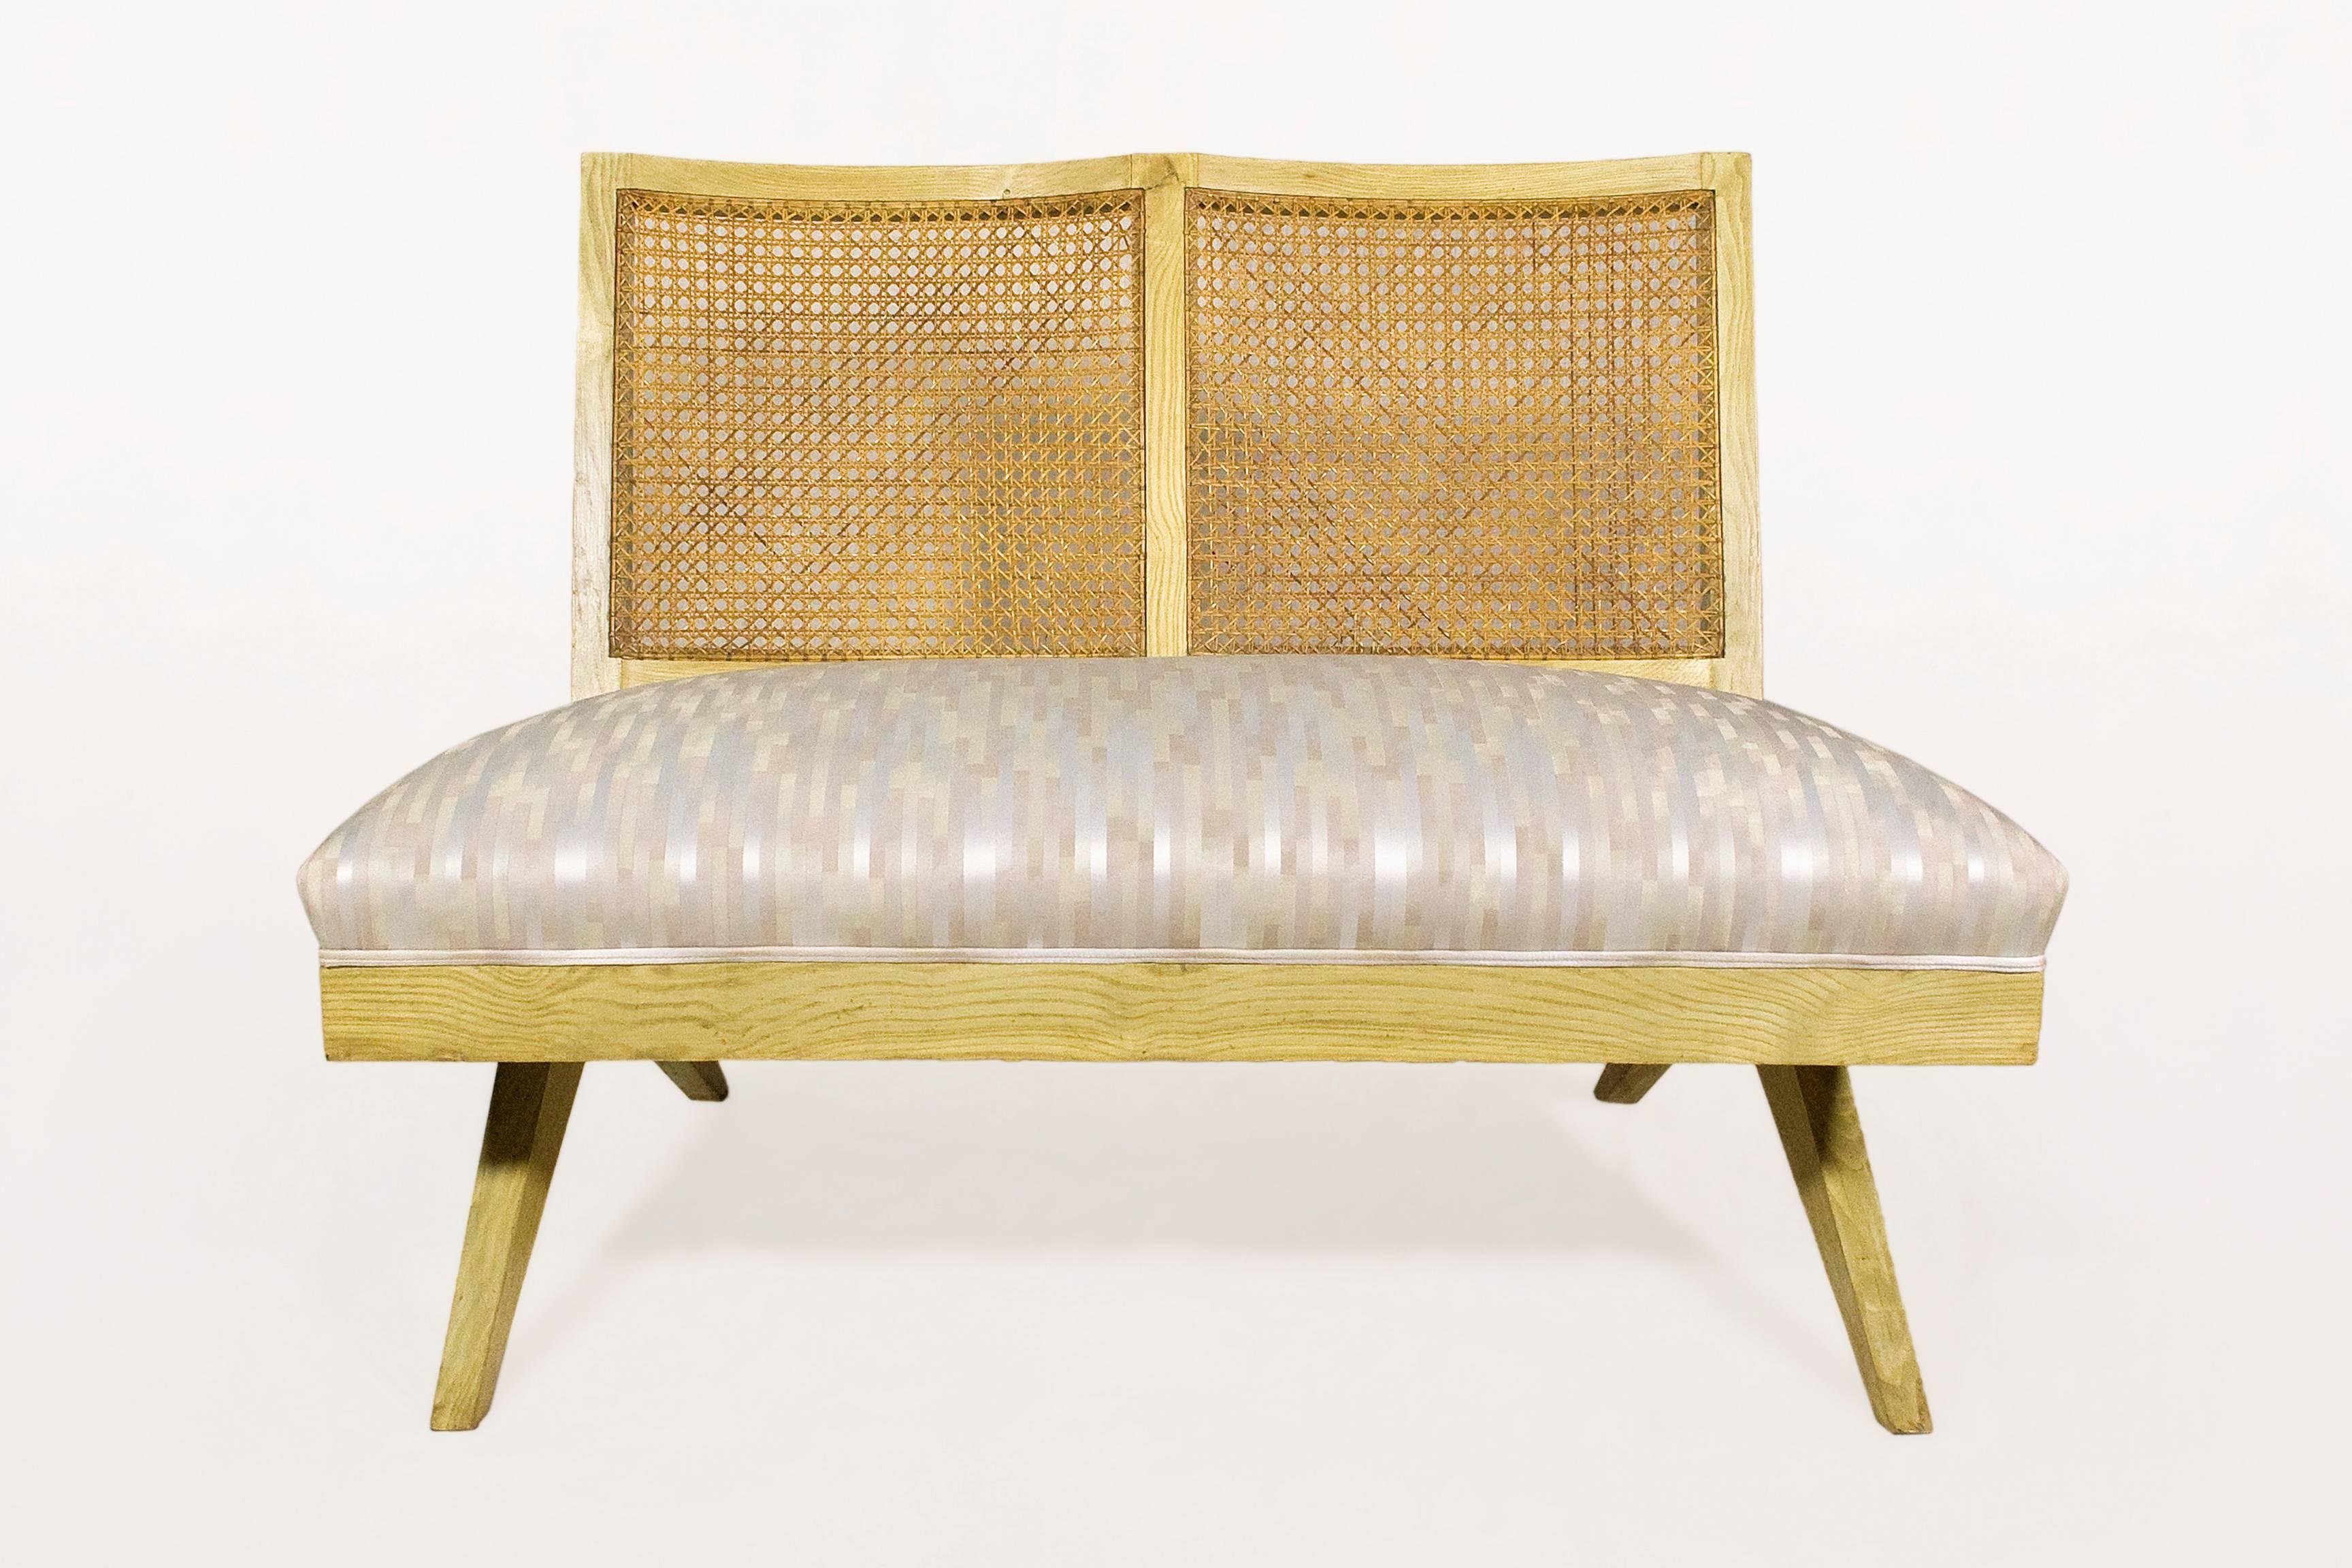 Oak loveseat.
Re-upholstered.
Elegant design, 
circa 1950, France.
Very good vintage condition.